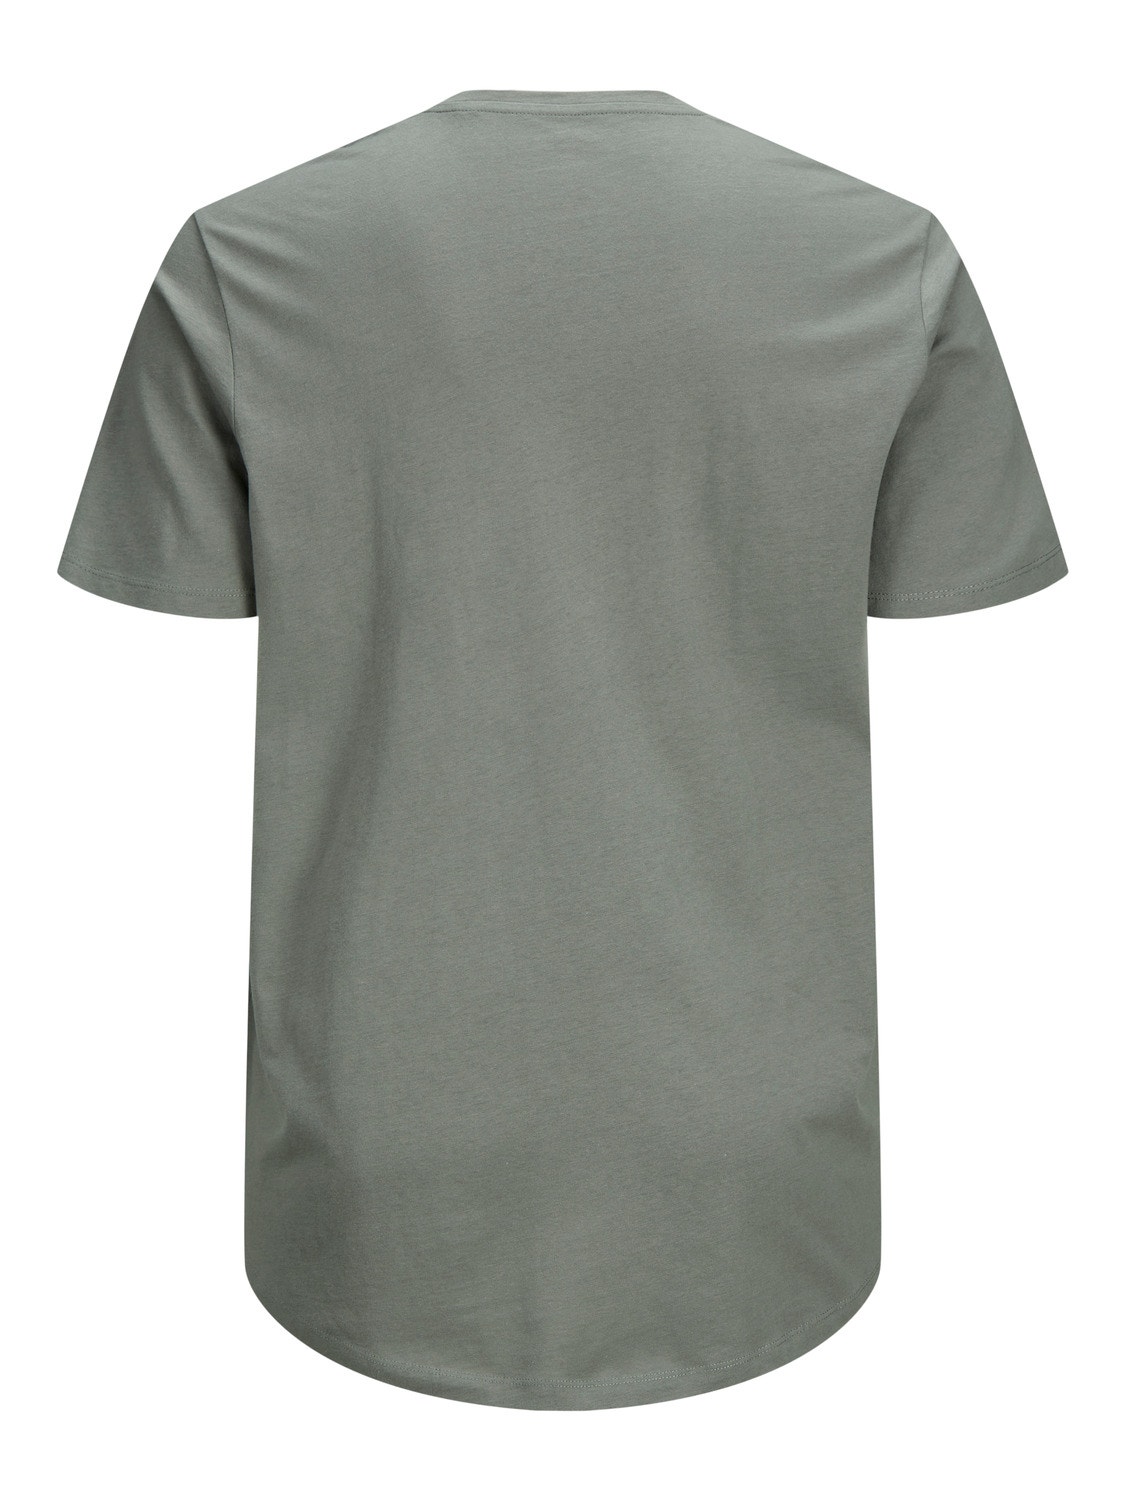 Jack & Jones Plus Size T-shirt Liso -Sedona Sage - 12184933